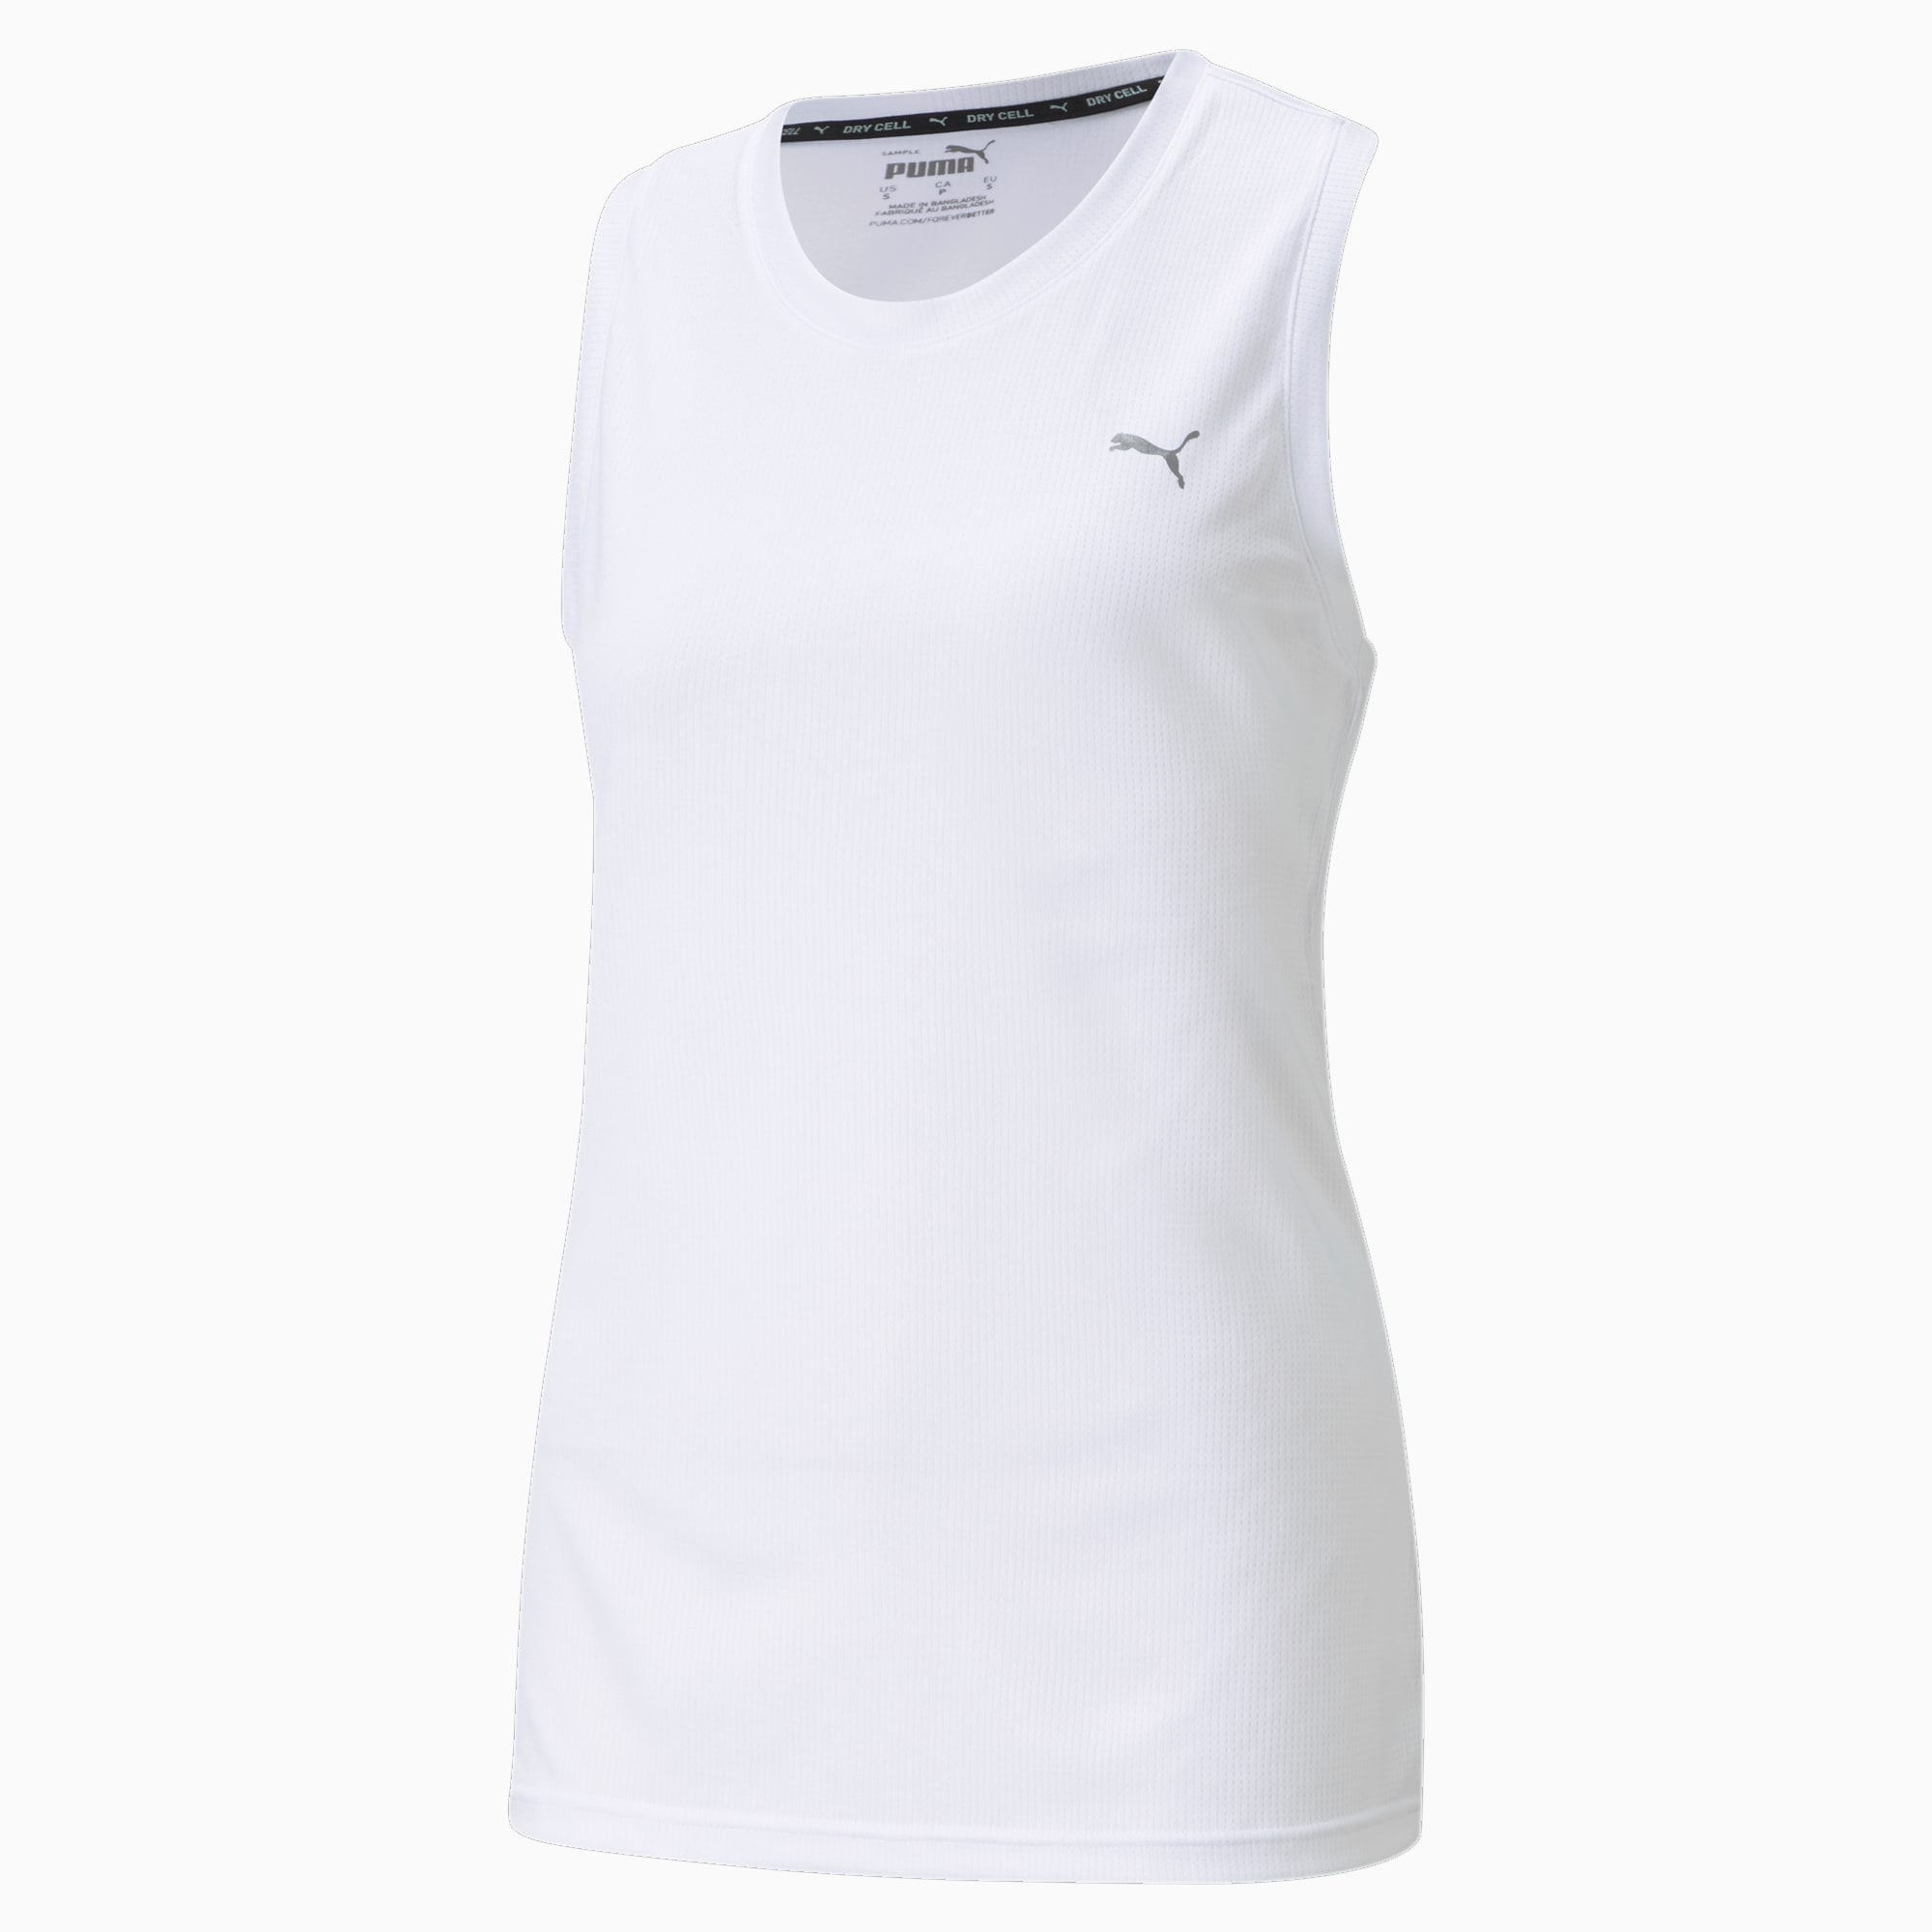 PUMA Performance Women's Training Tank Top Shirt, White, Size XL, Clothing